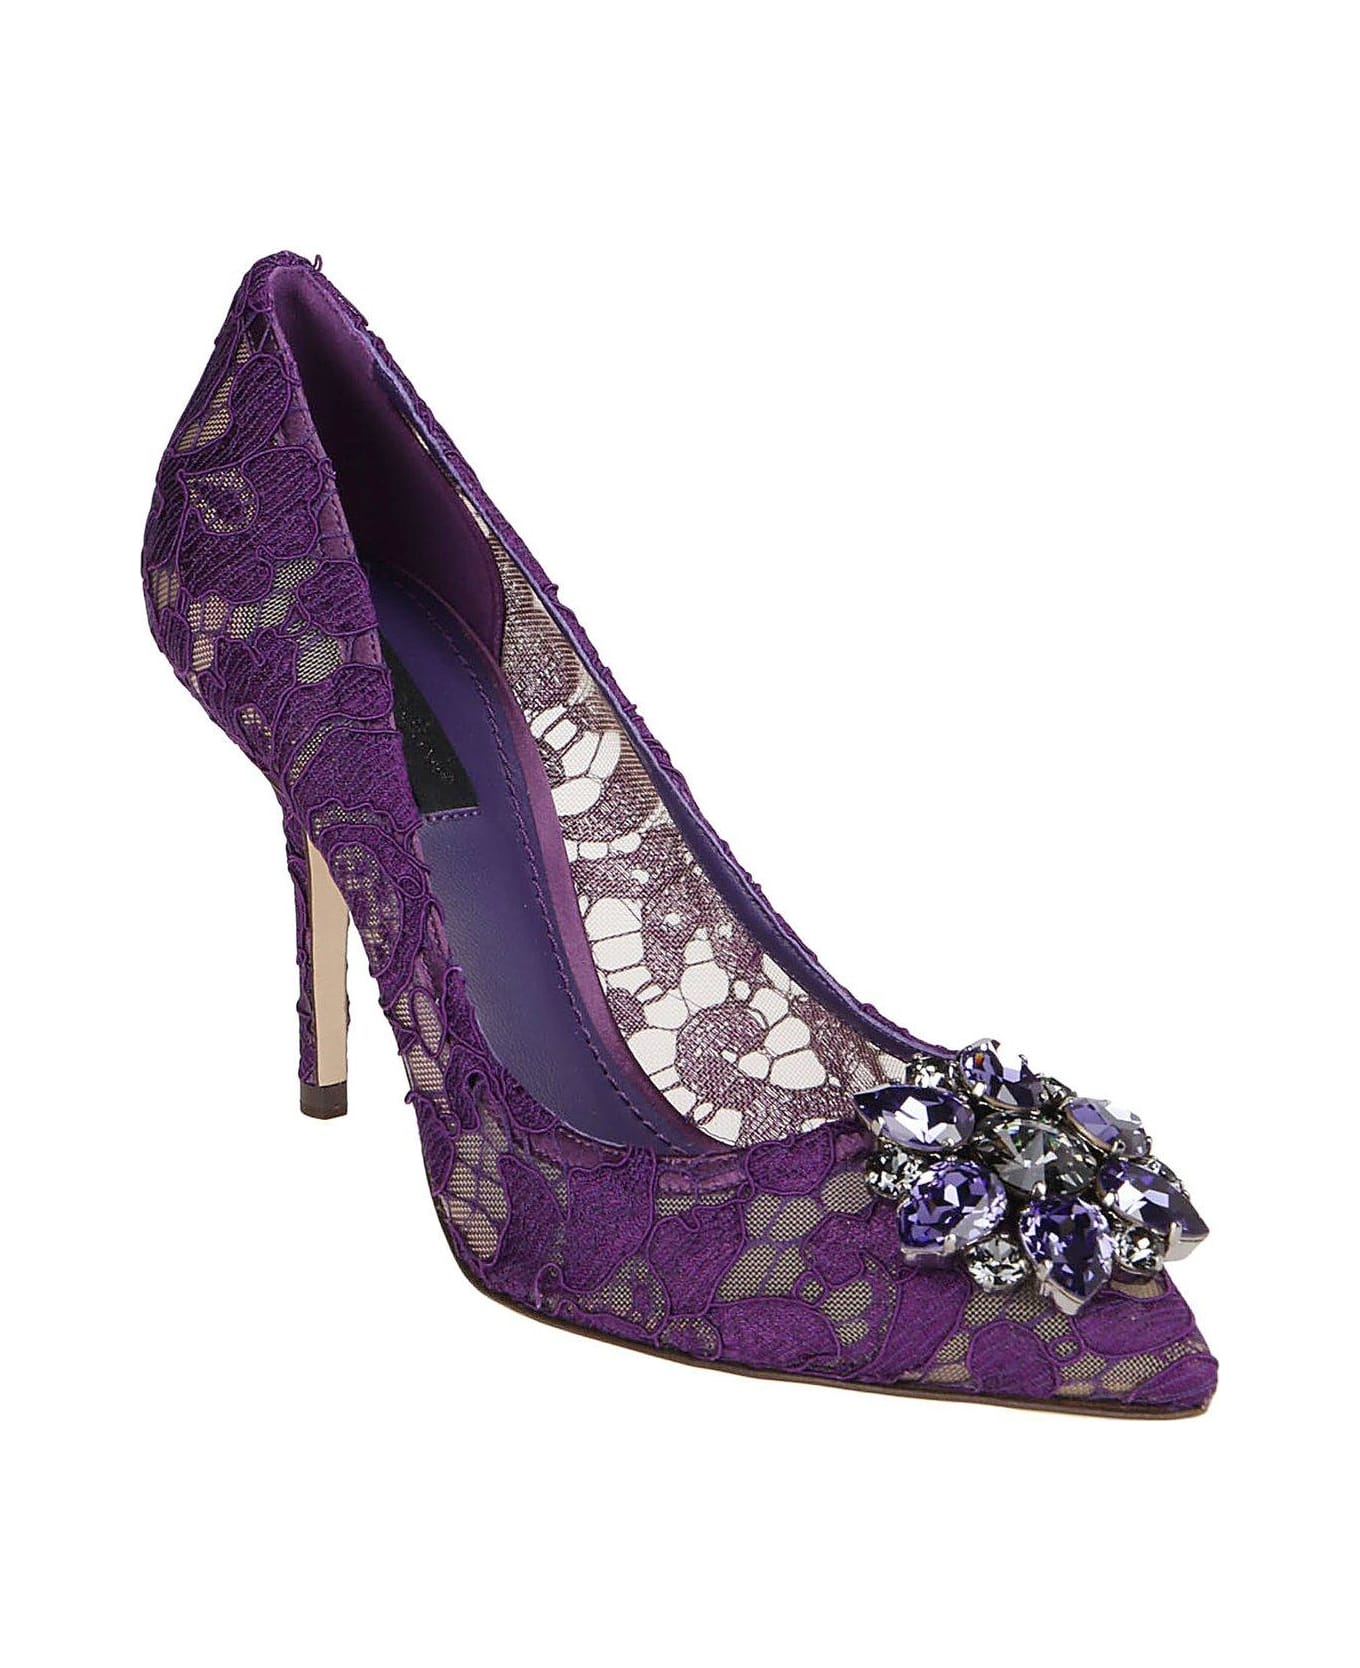 Dolce & Gabbana Taormina Lace Embellished Pumps - Viola ハイヒール